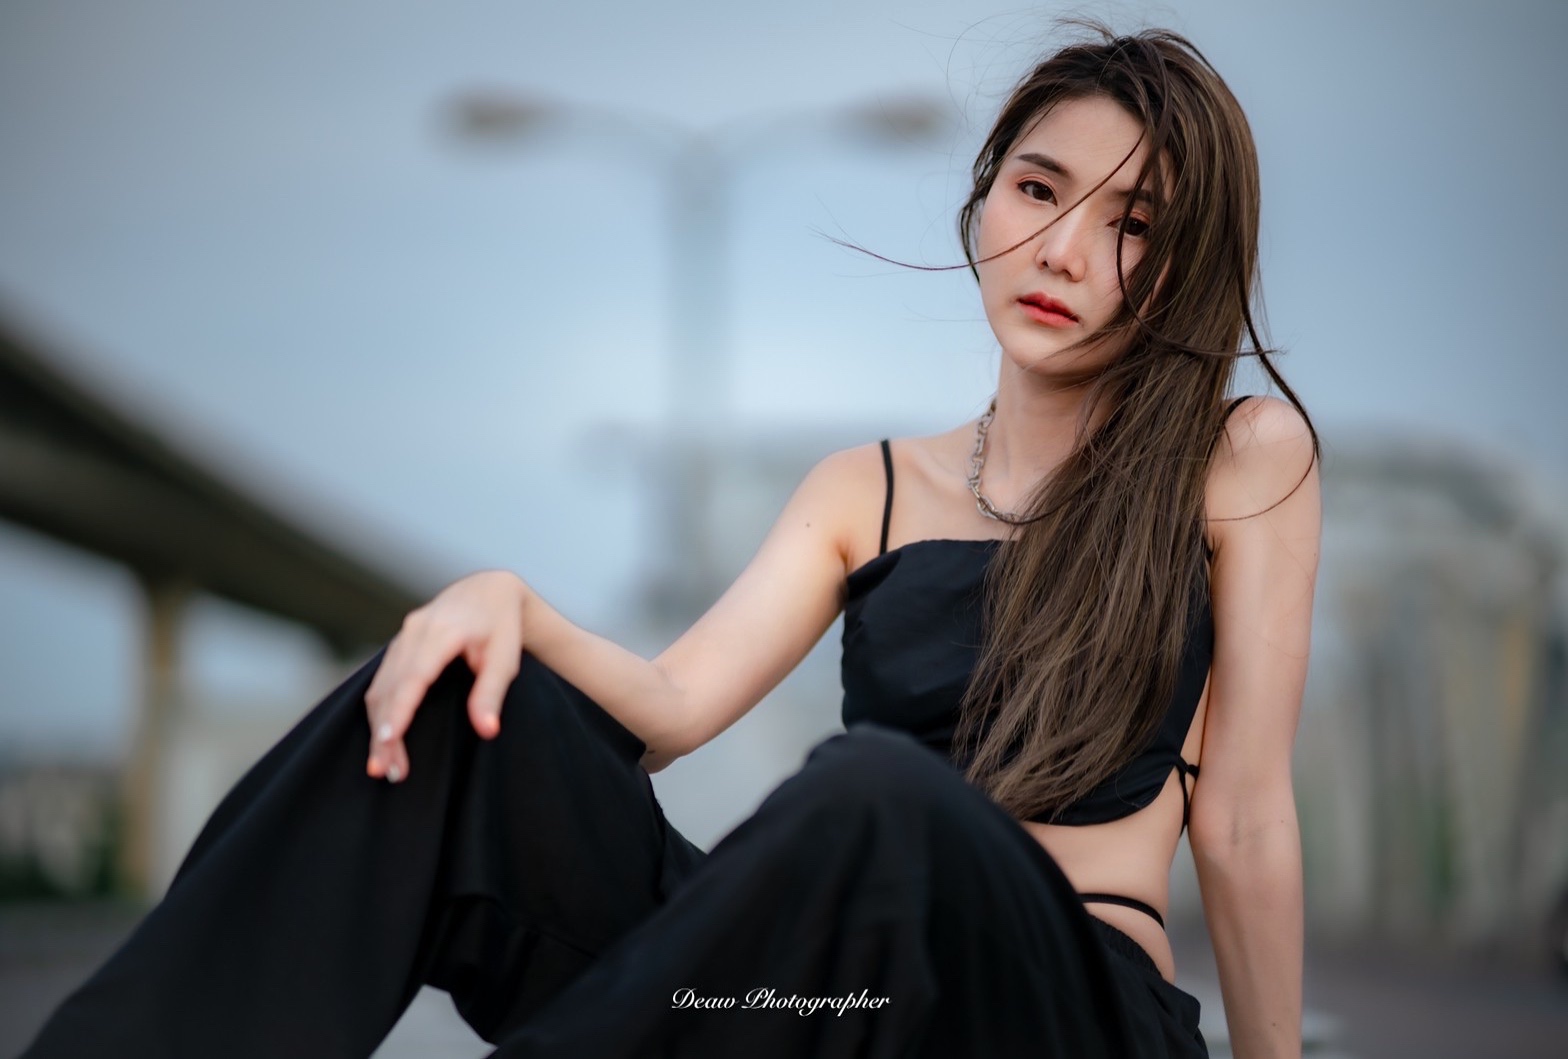 Model Women Asian Photographer 1568x1059